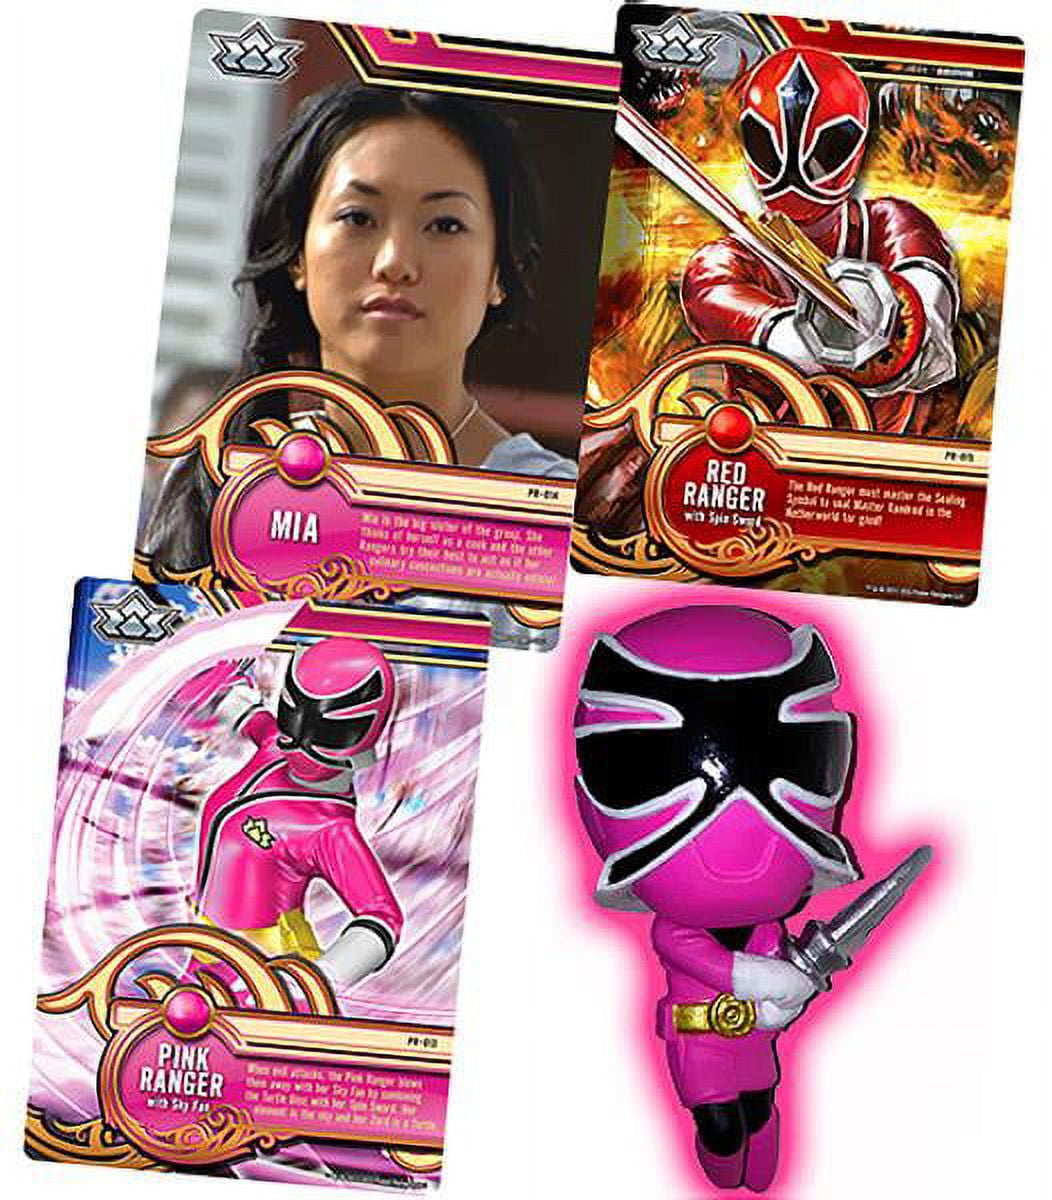 pink power ranger samurai